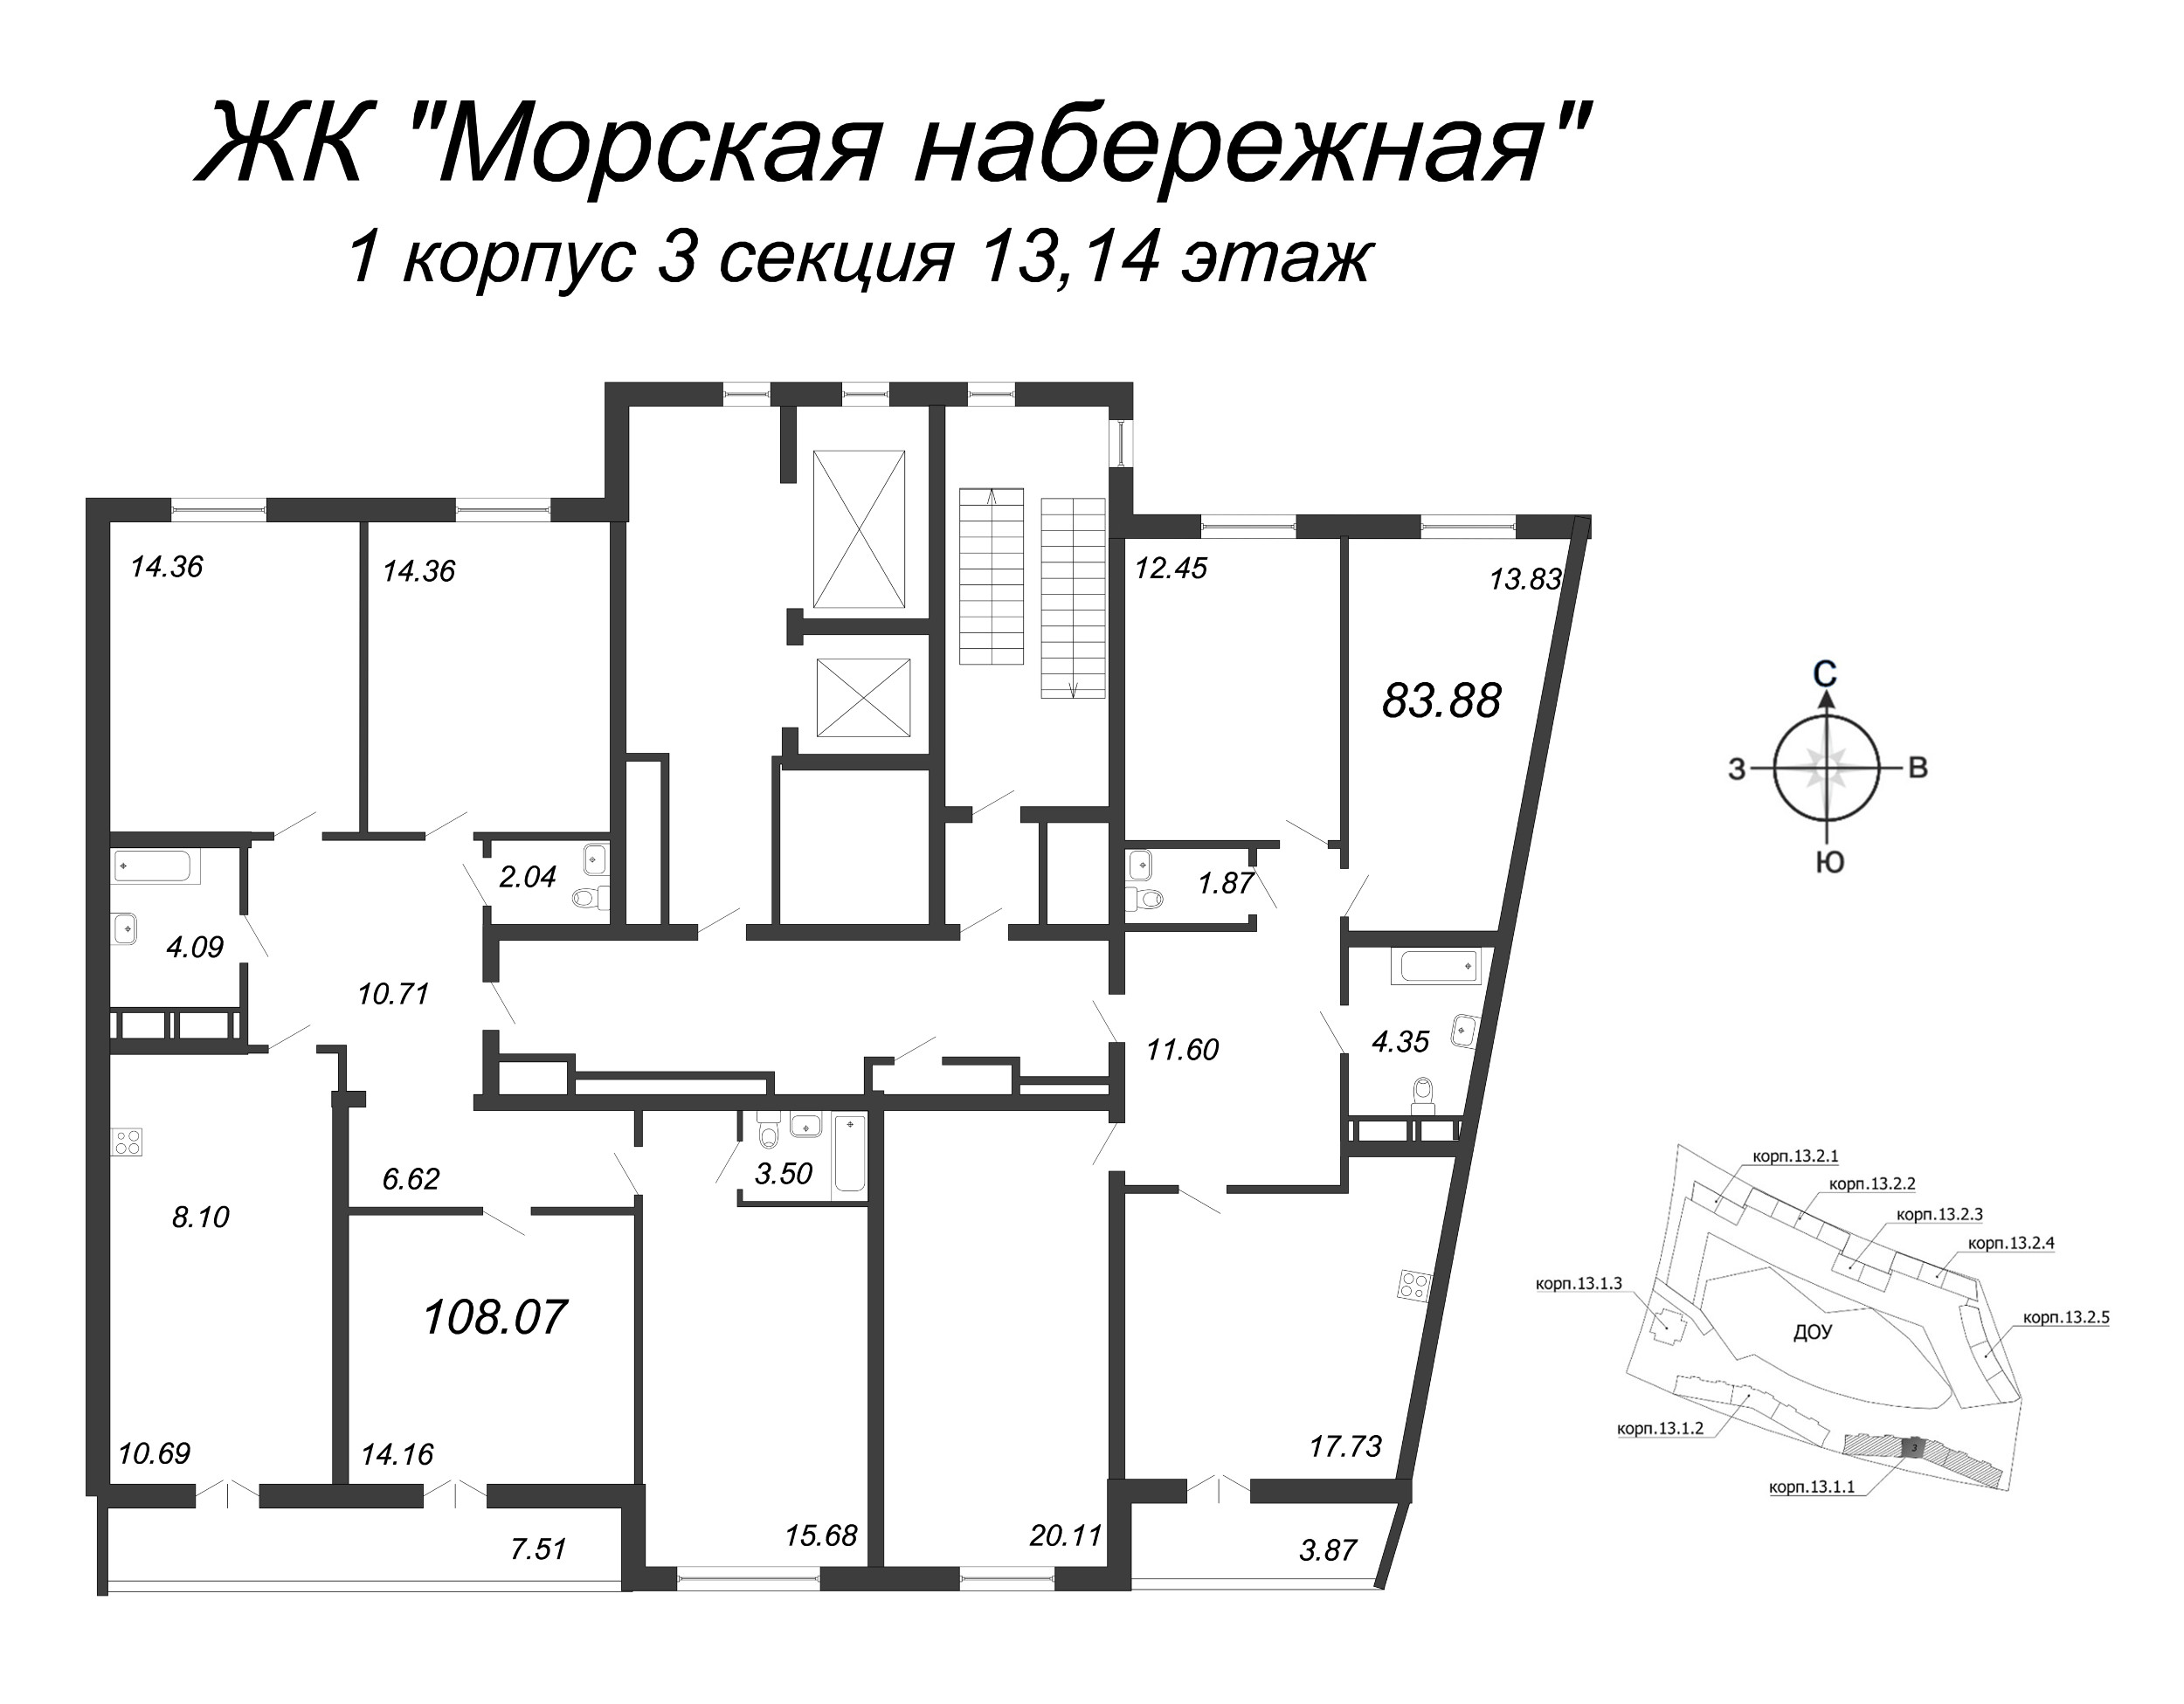 5-комнатная (Евро) квартира, 107.8 м² - планировка этажа